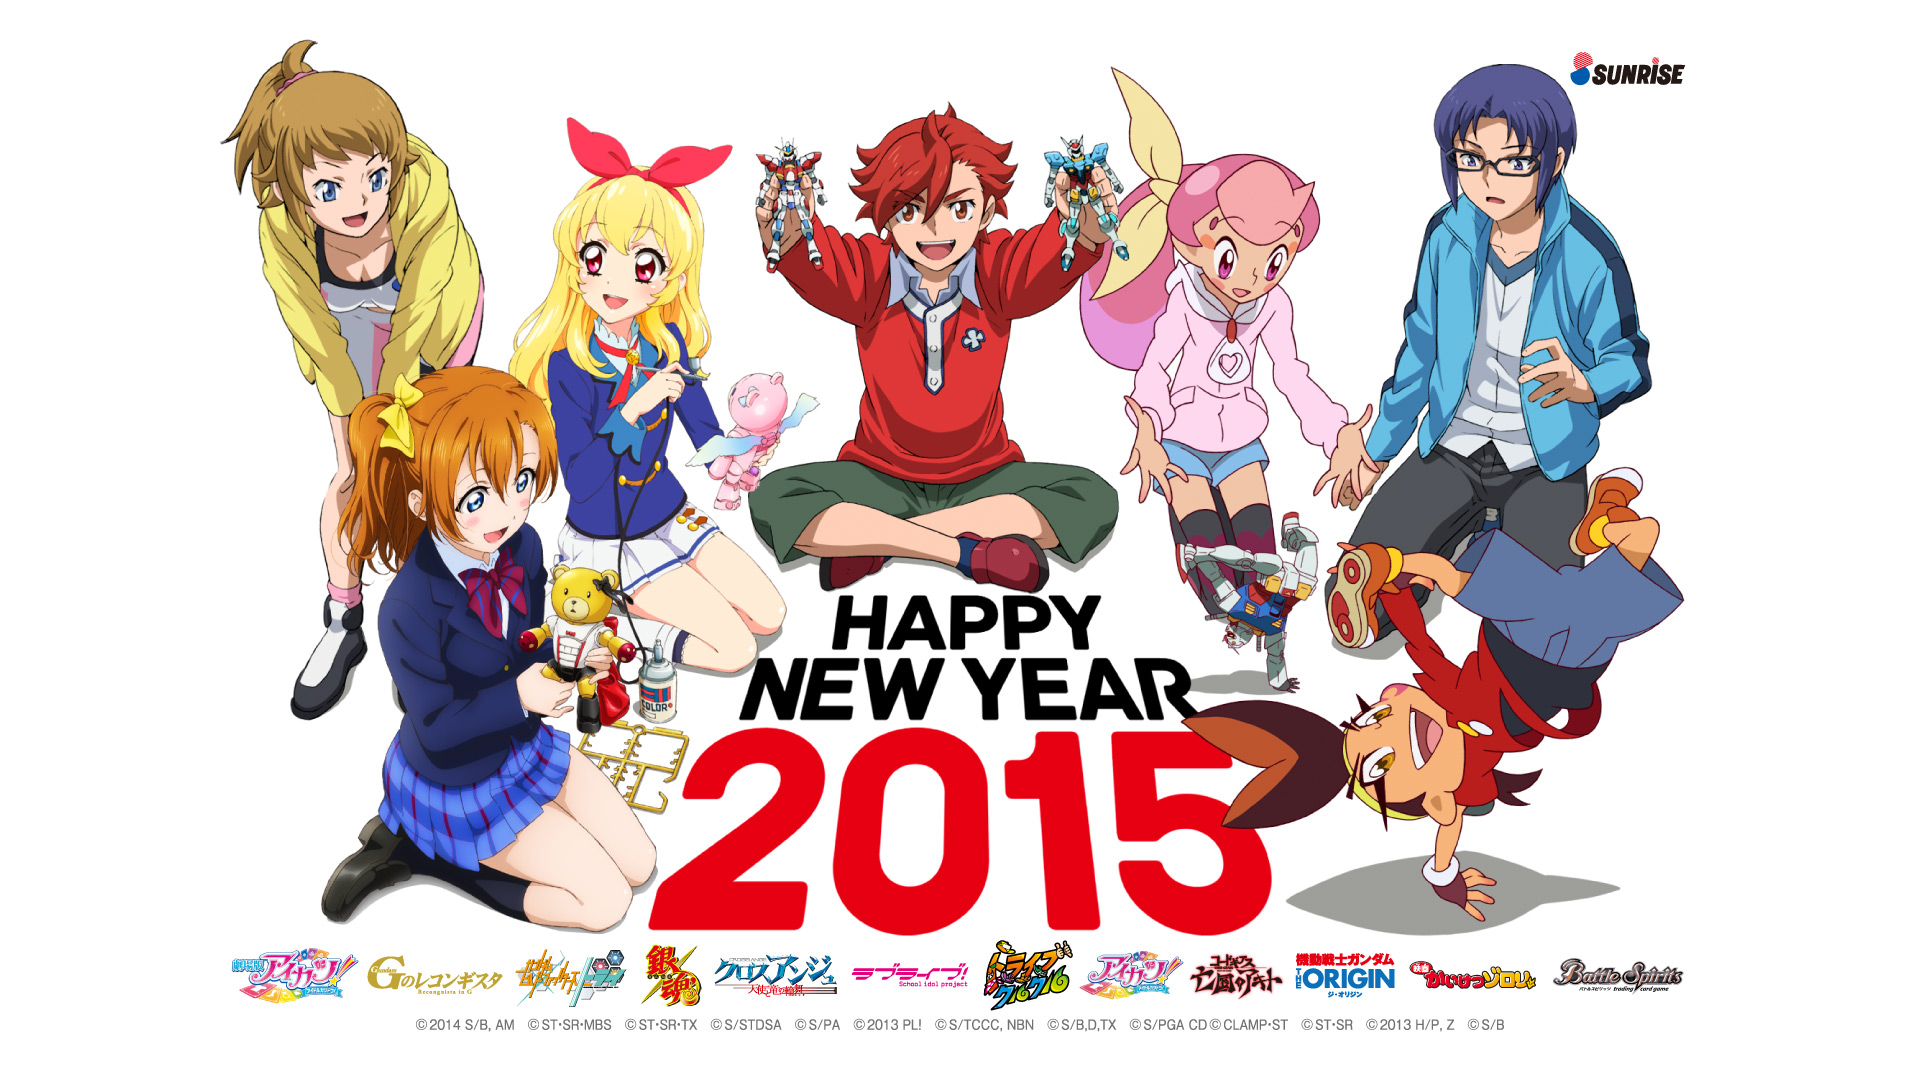 sunrise2015 Happy New Year 2015: Anime Beautiful Illustrations